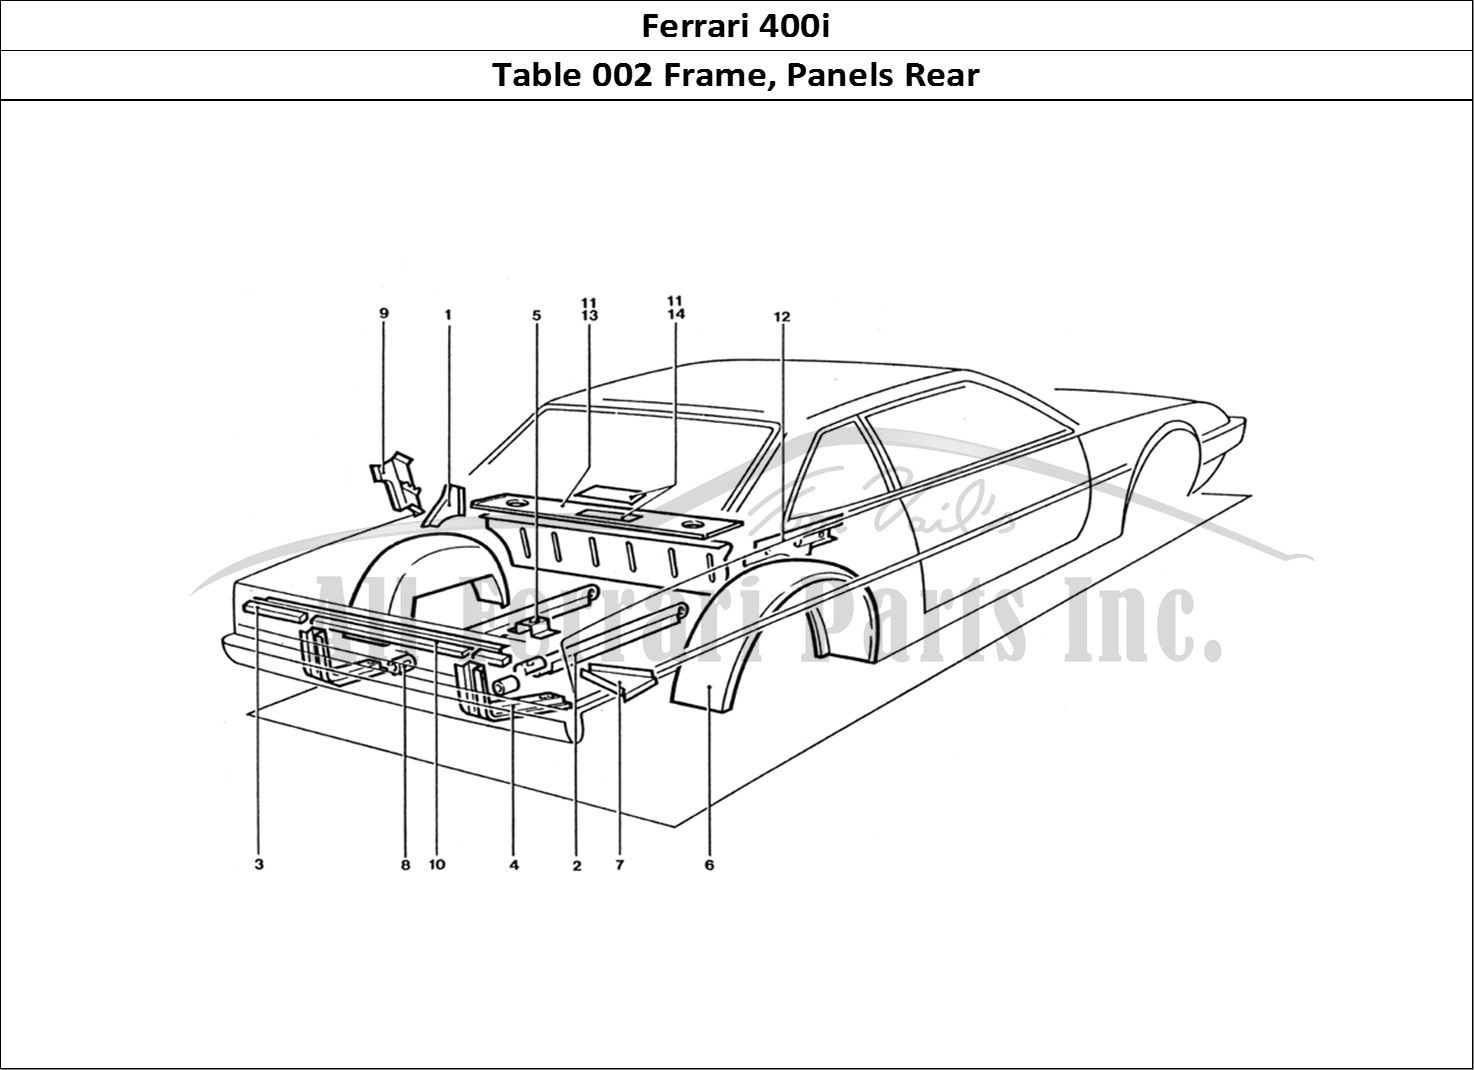 Ferrari Parts Ferrari 400 GT (Coachwork) Page 002 Rear panel & sheilds